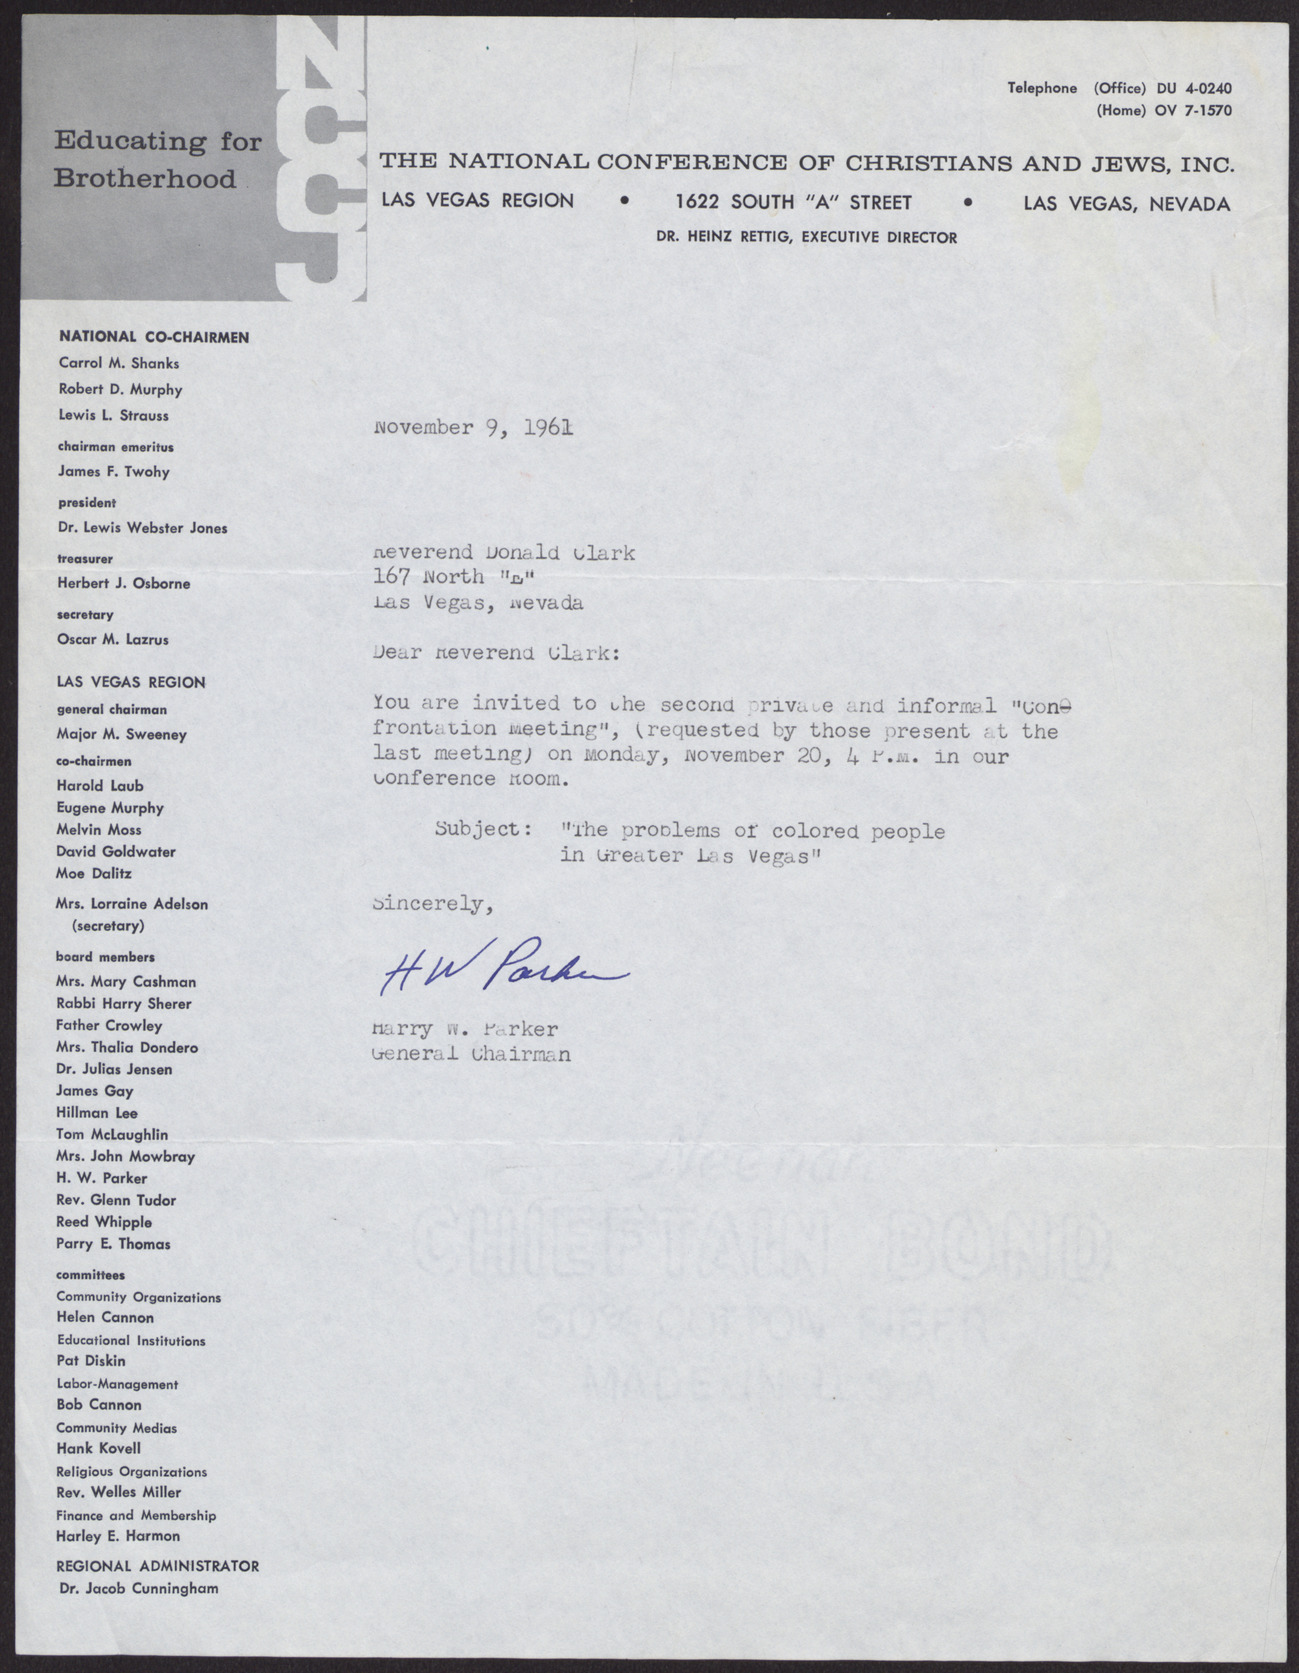 Letter to Reverend Donald Clark from Harry W. Parker, November 9, 1961